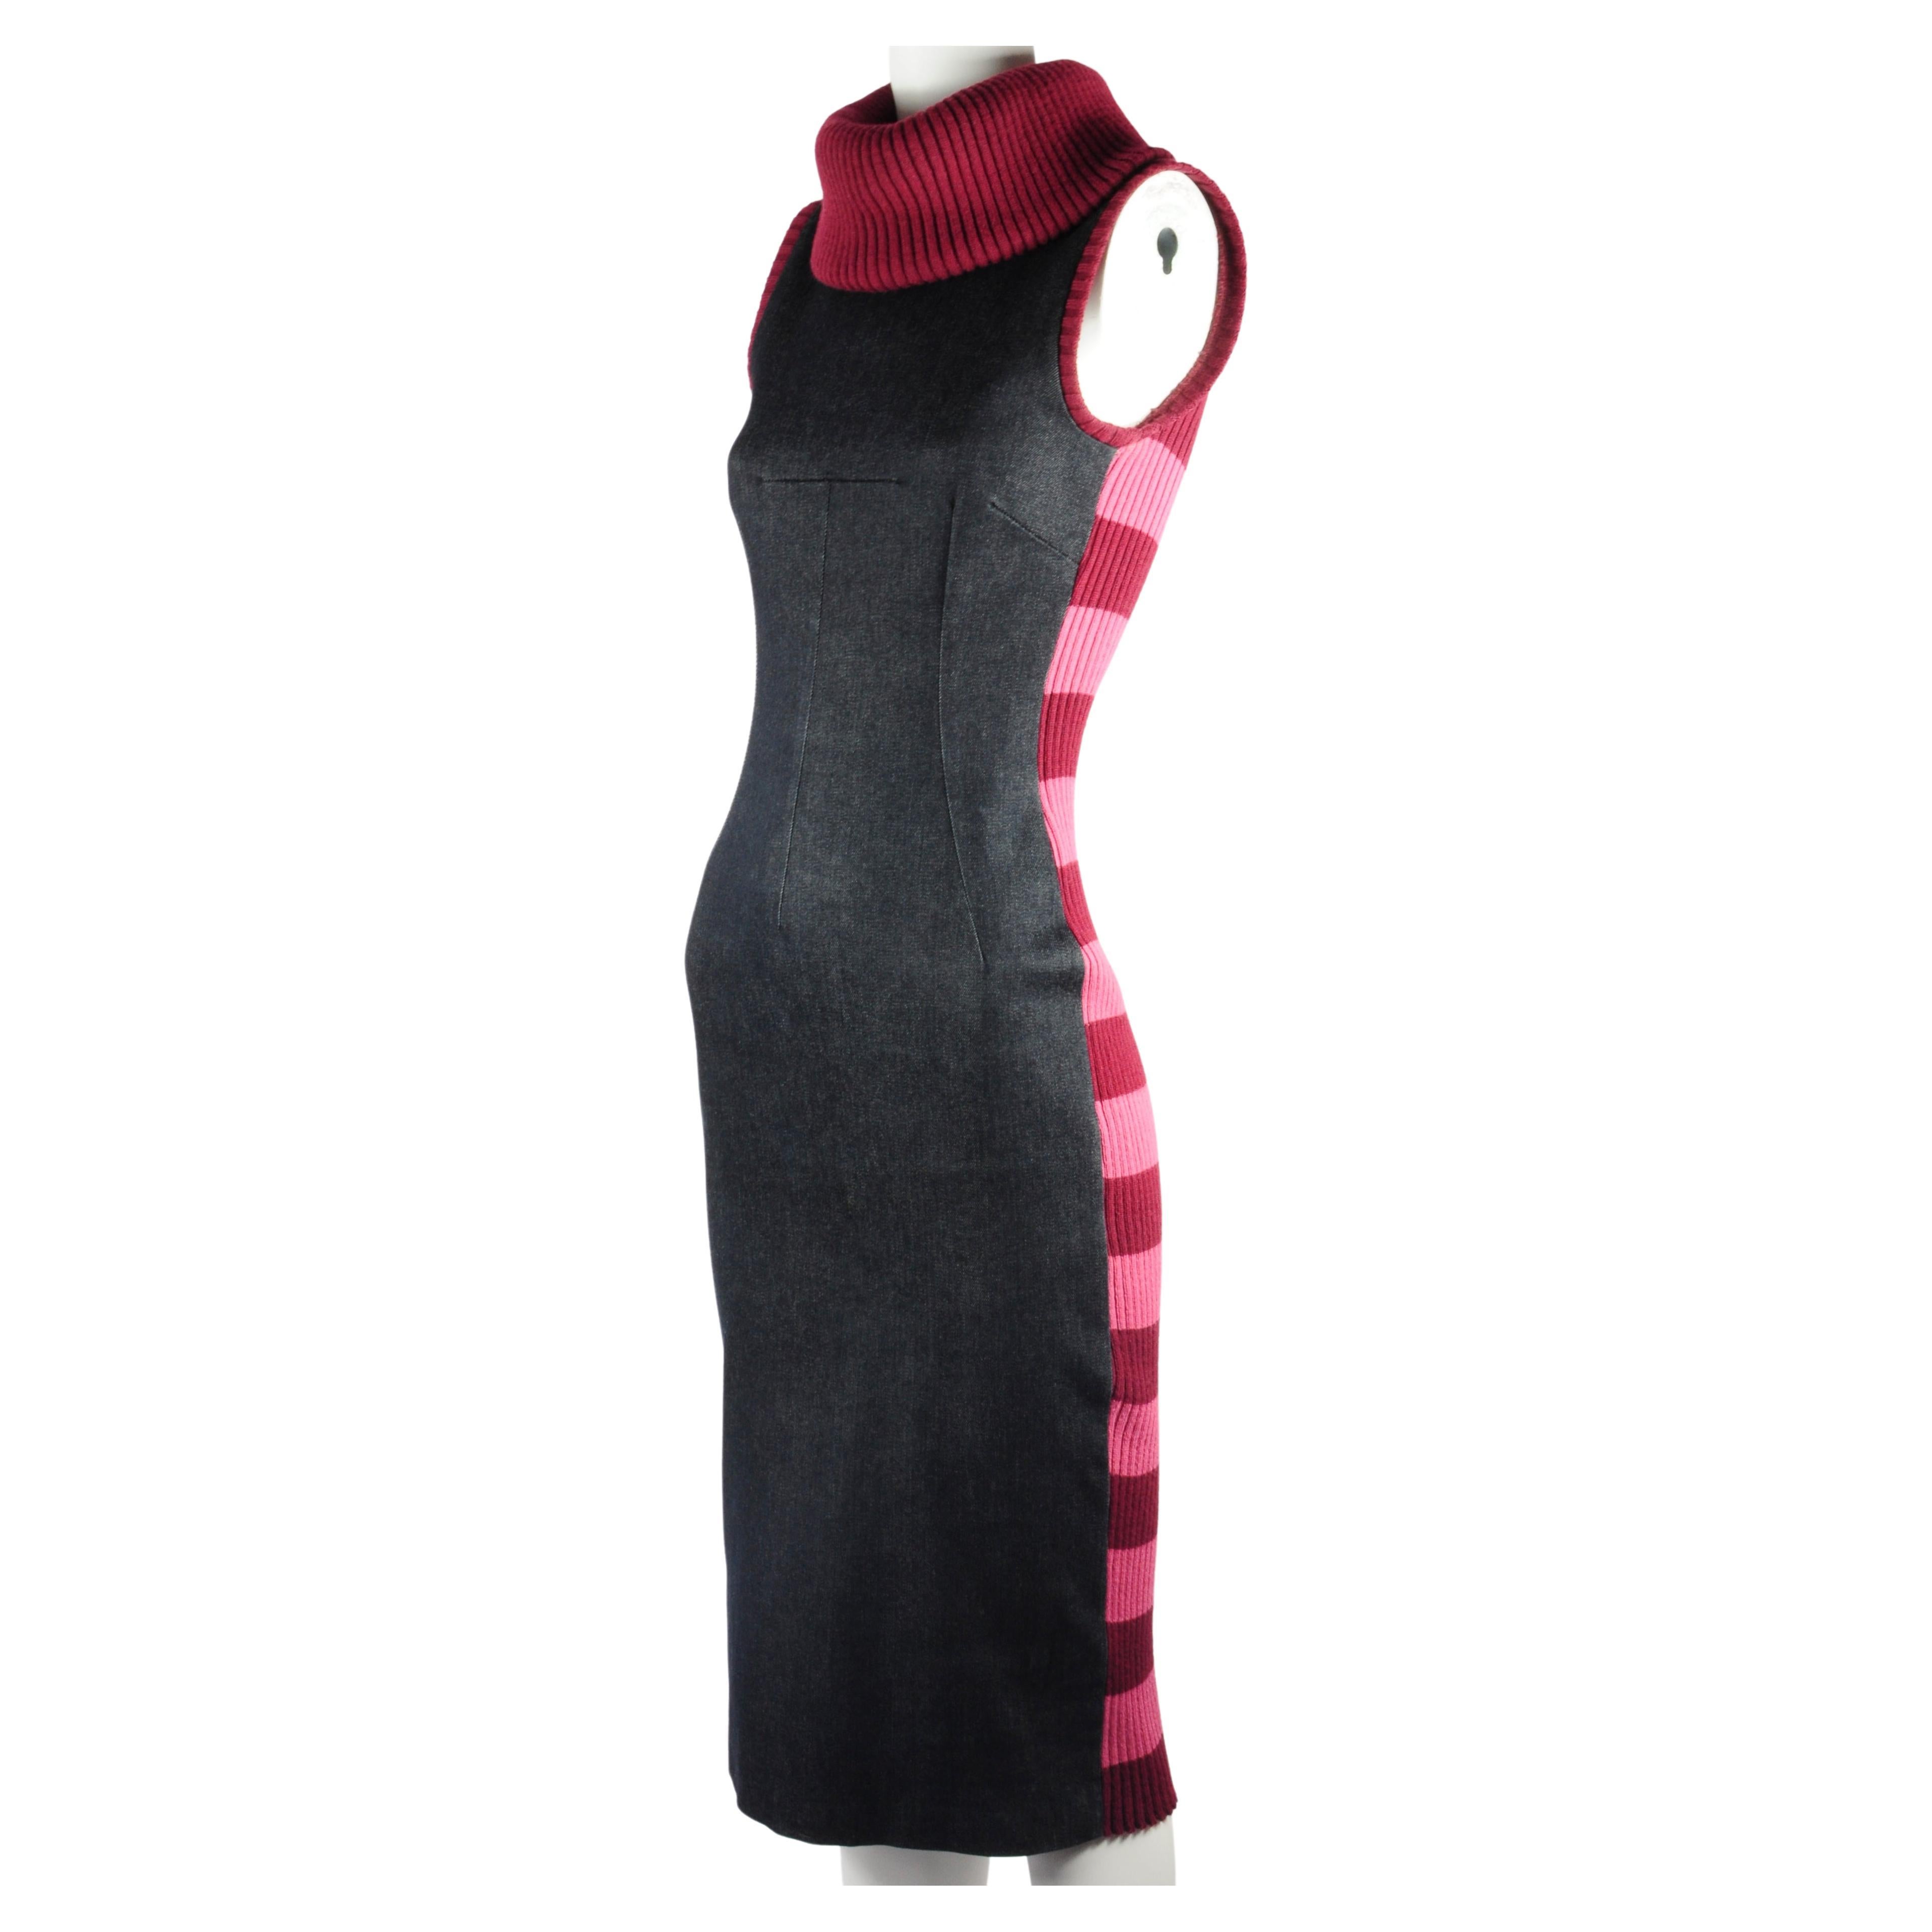 D&G Dolce & Gabbana Denim and Knitwear Dress Striped Turtleneck Sleeveless 1990s For Sale